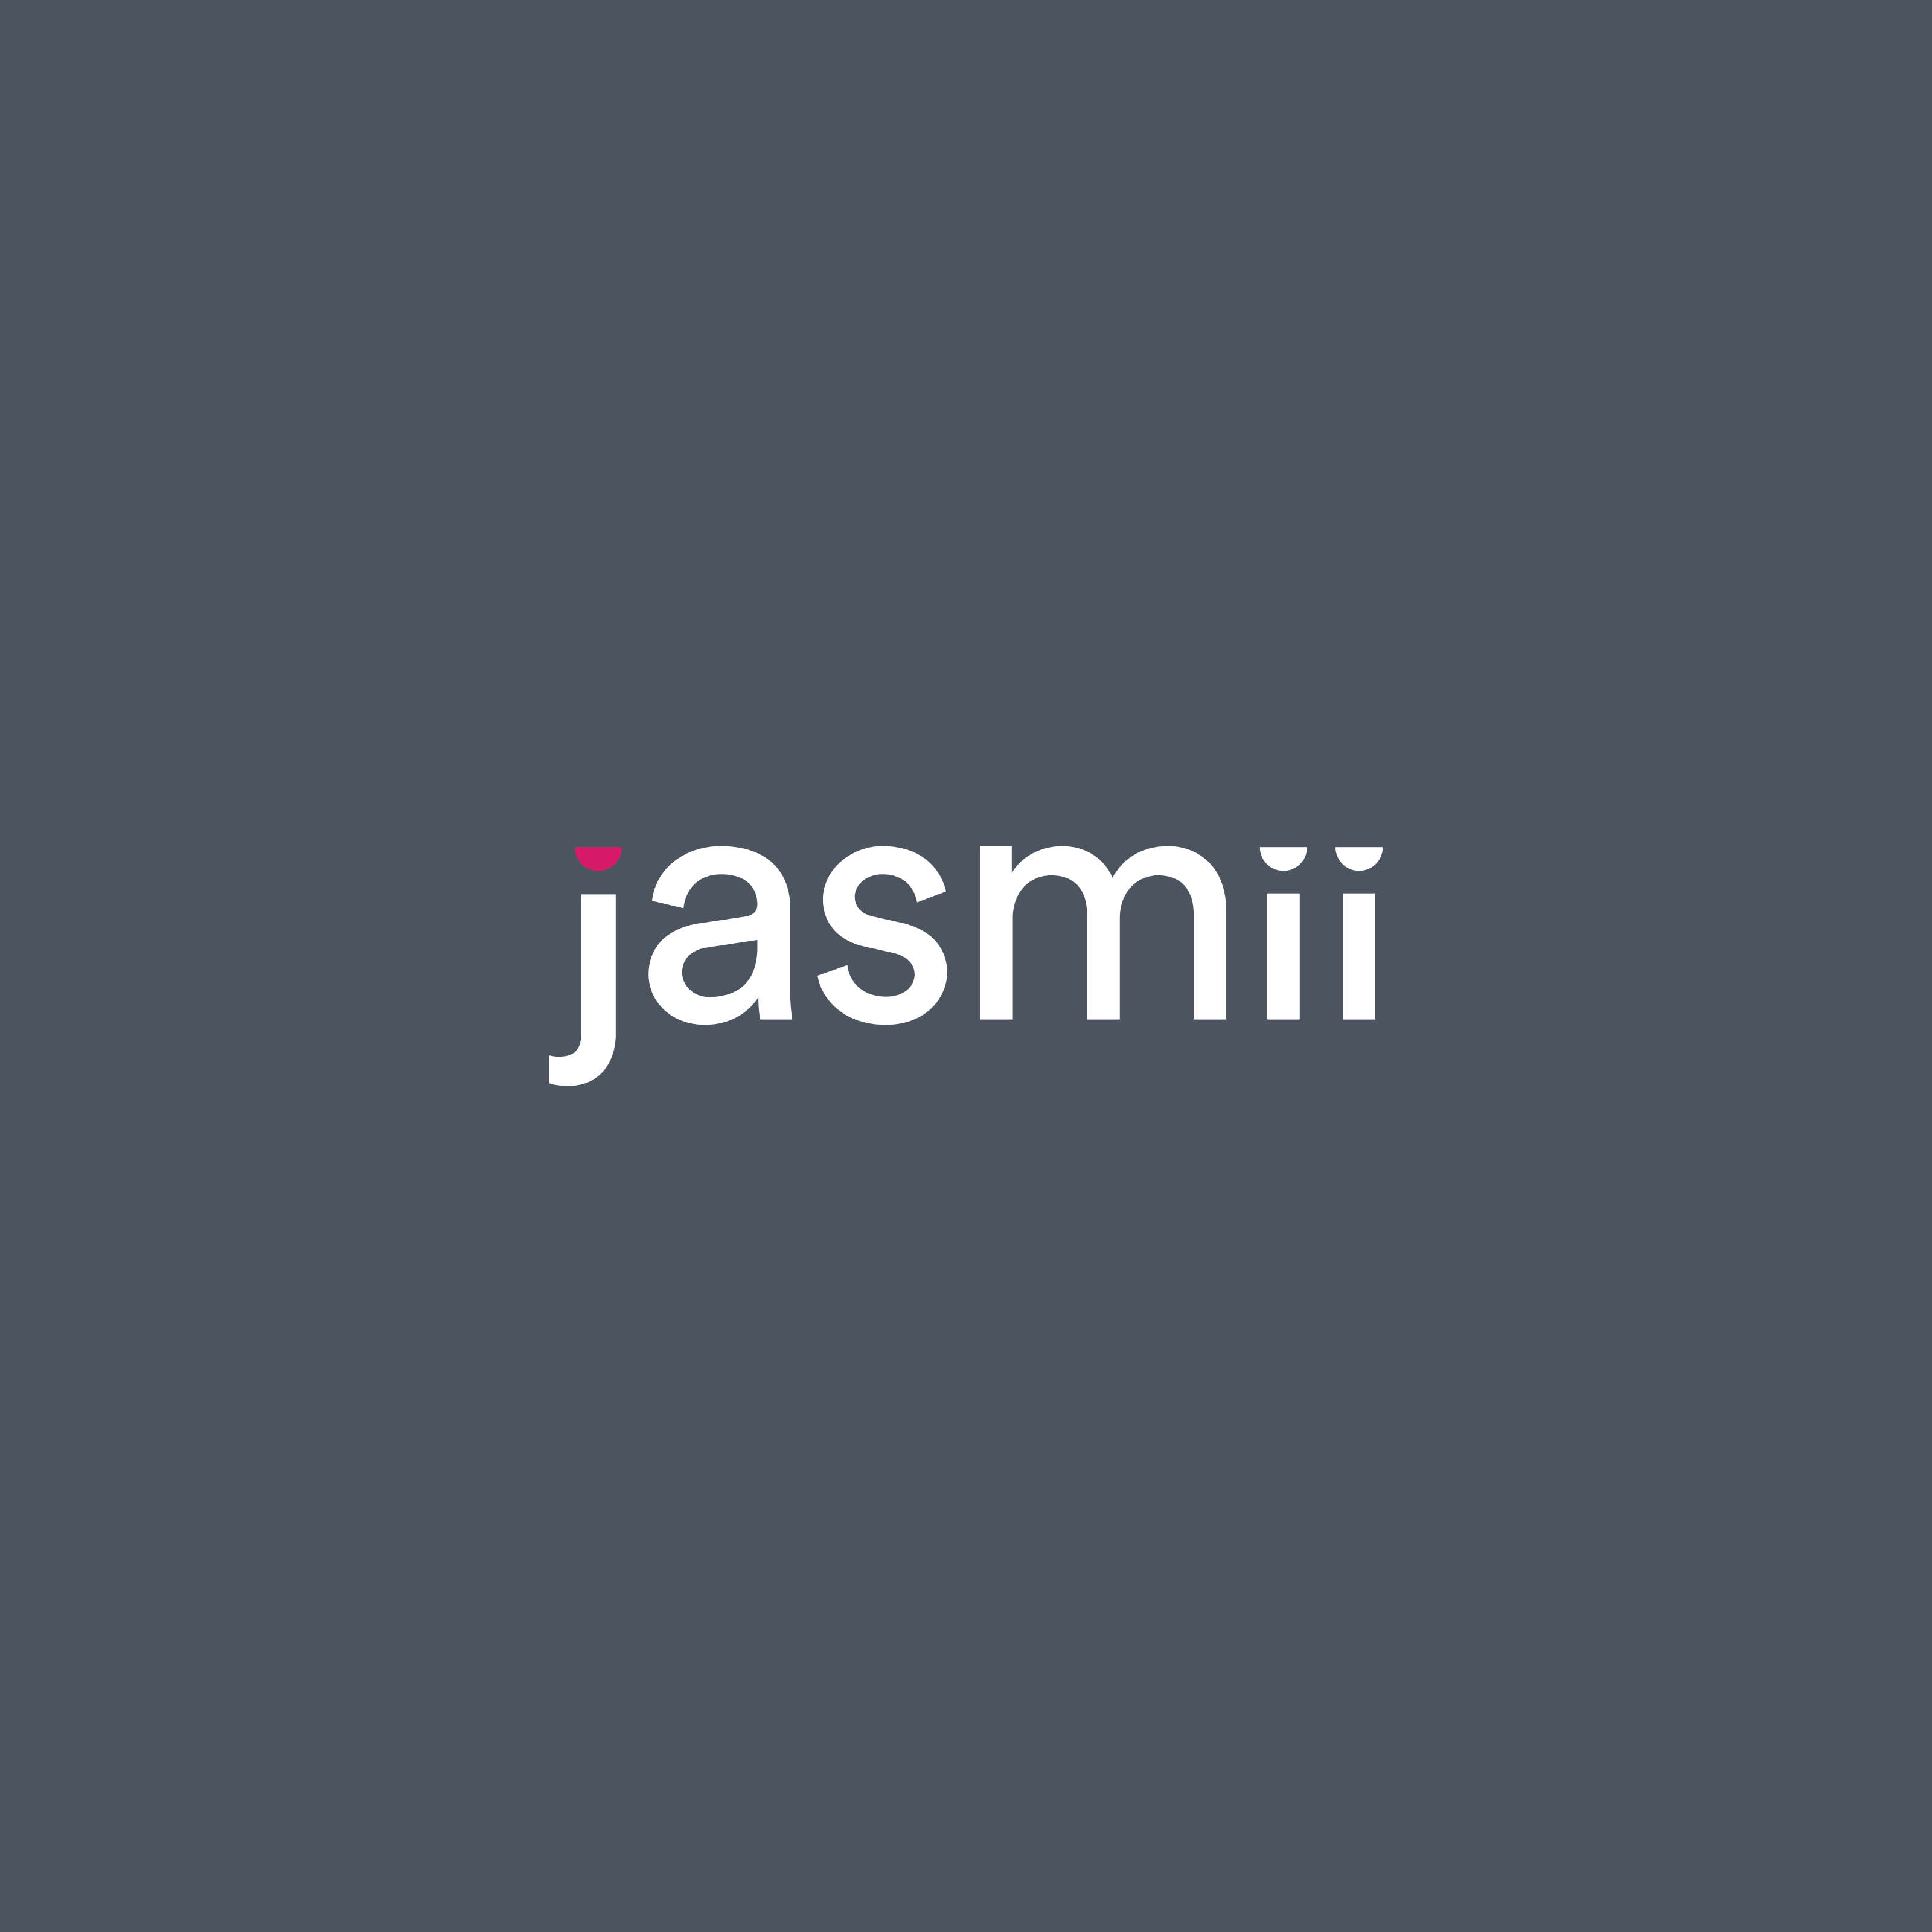 Jasmii Logo Graphic Design